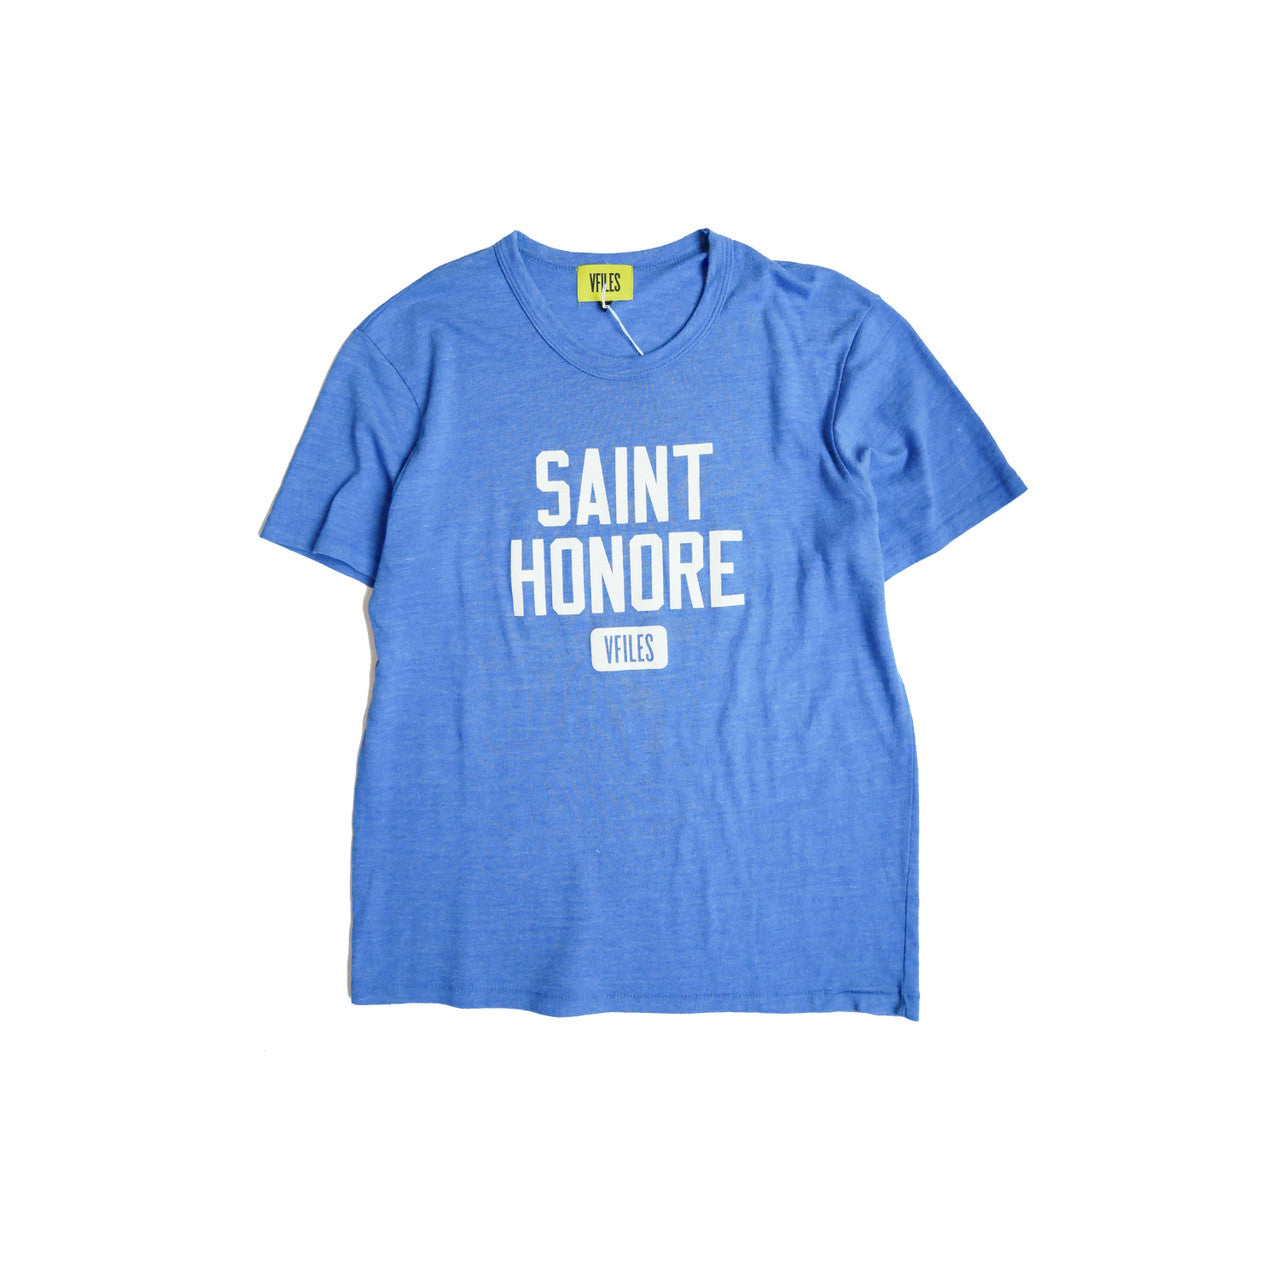 VFiles x Colette Saint Honore Tshirt